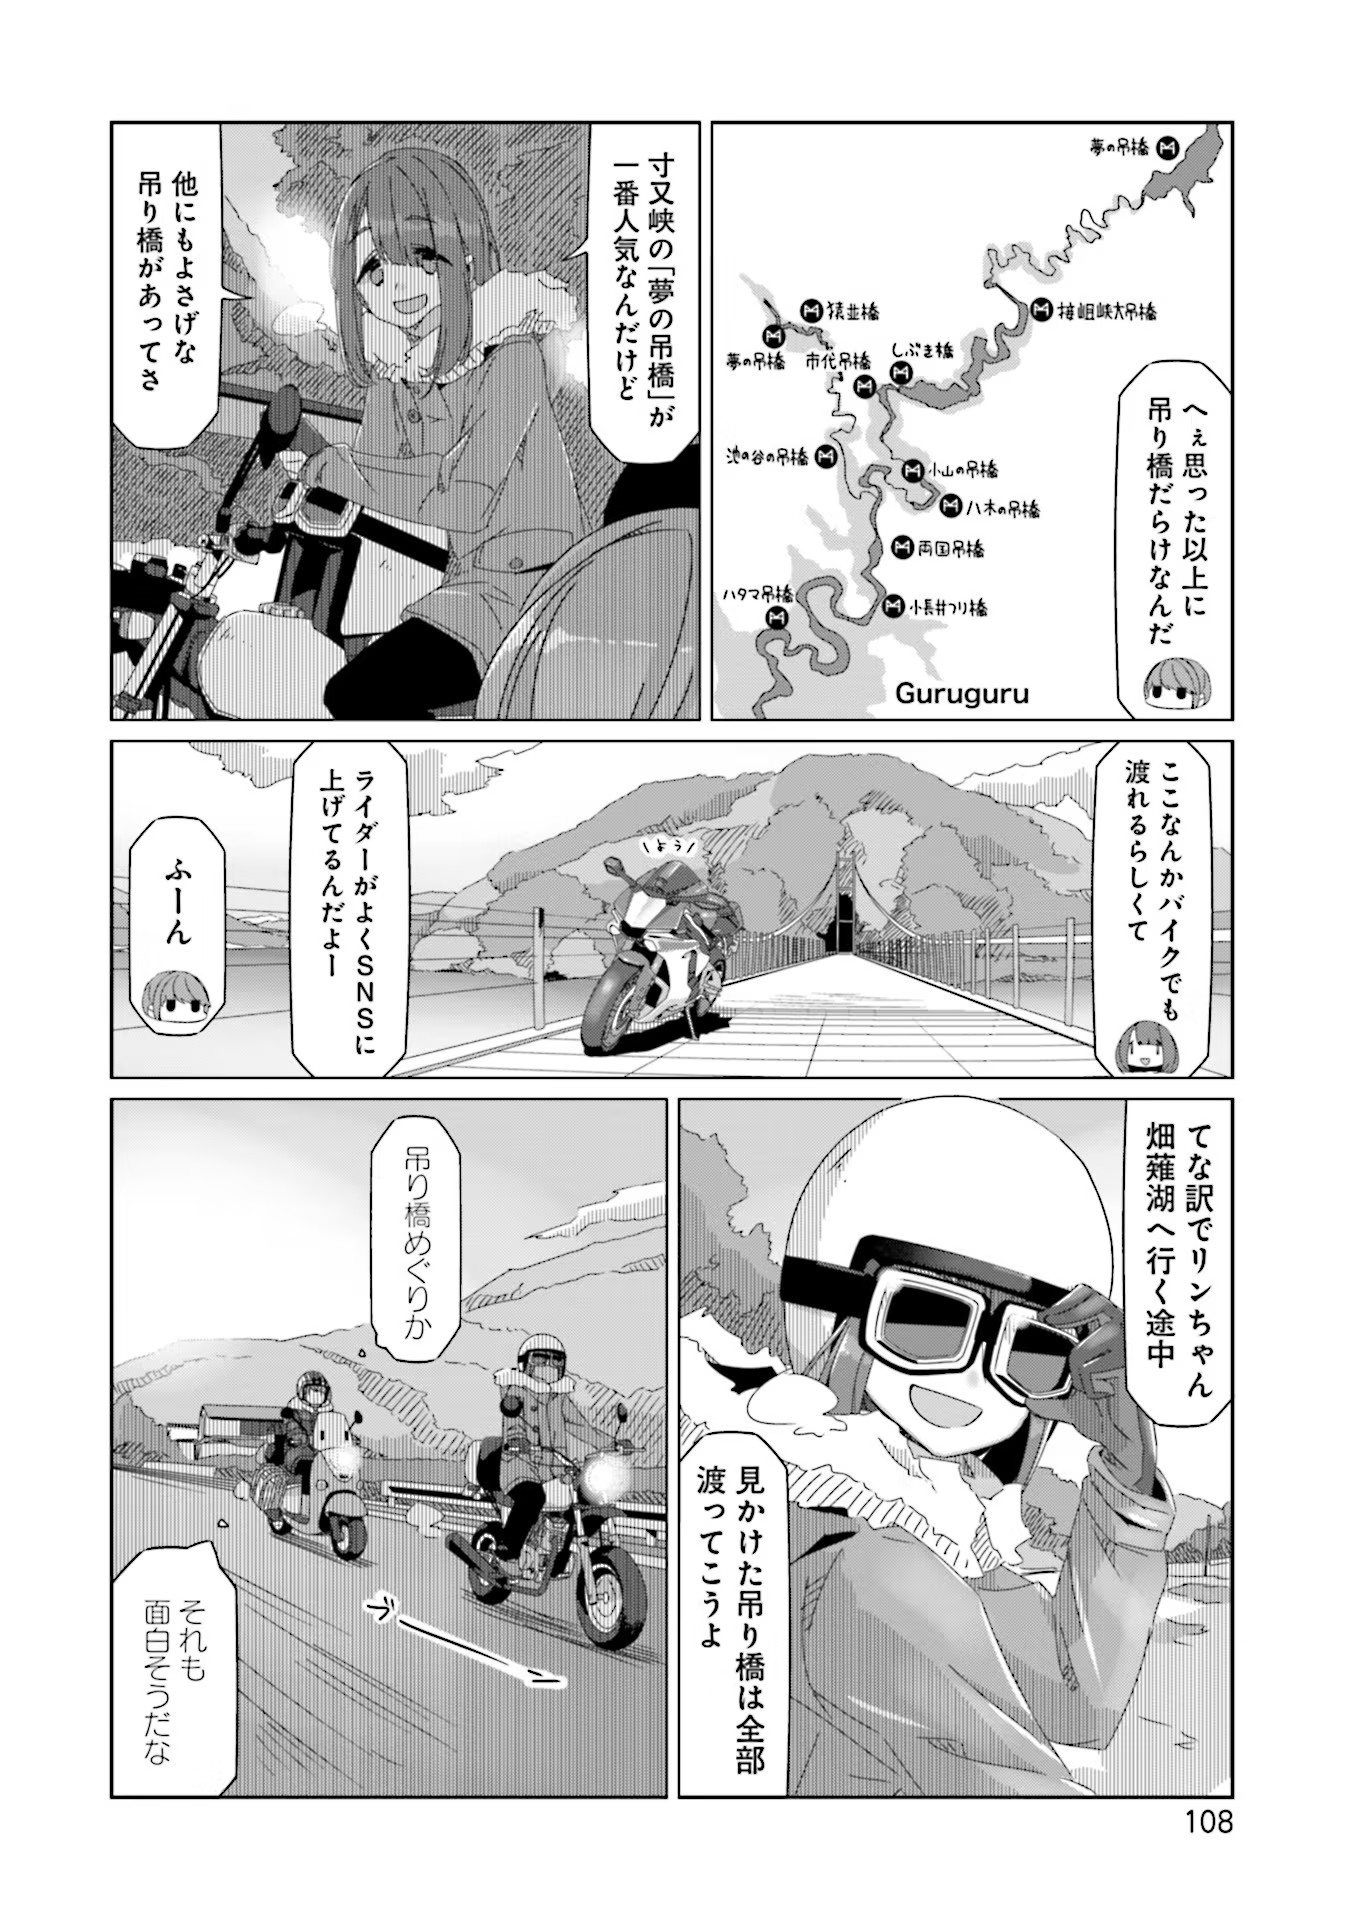 Yuru Camp - Chapter 57 - Page 2